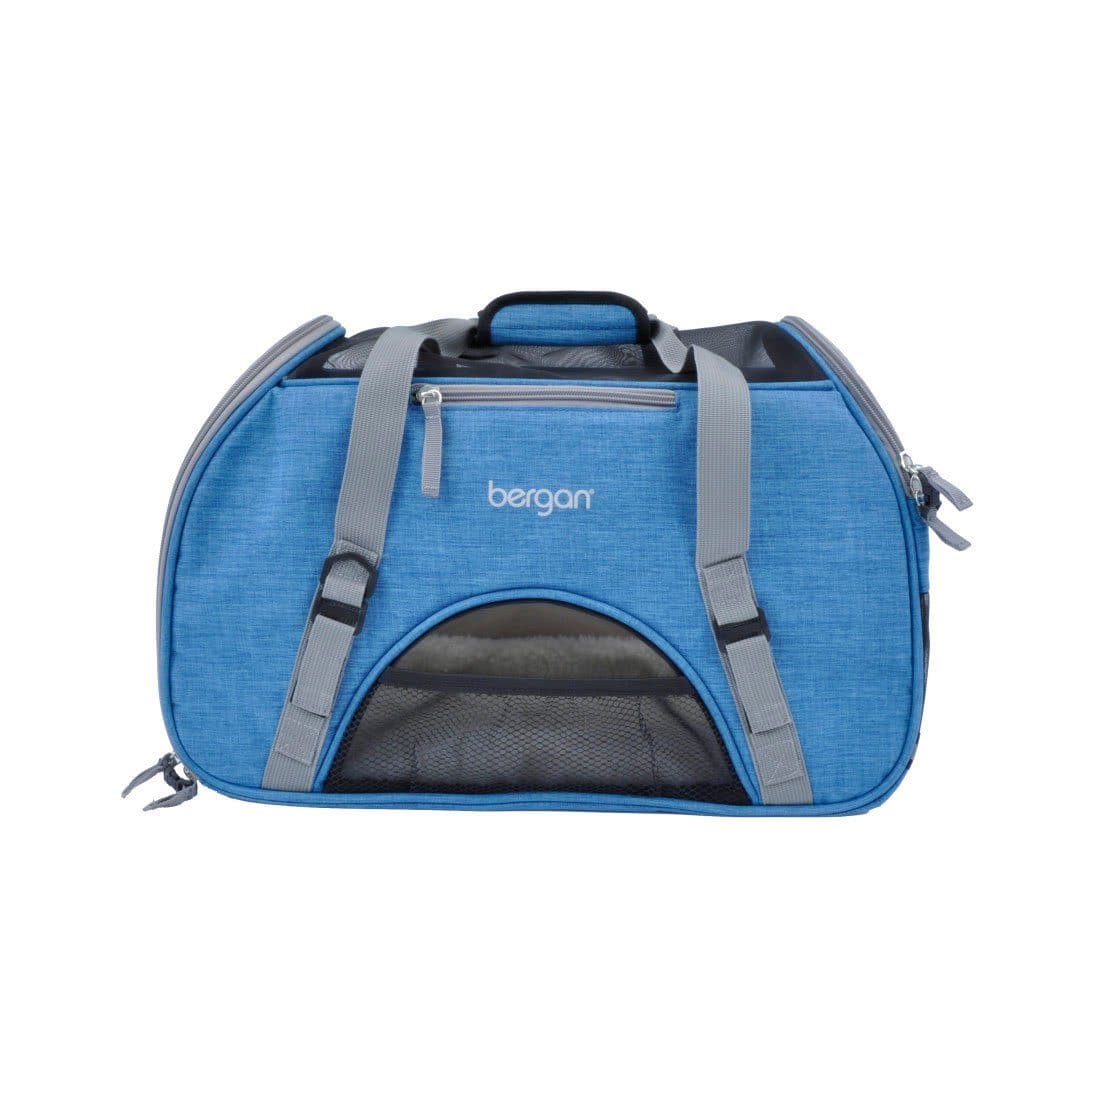 Transportadora Comfort en Colores Azul - Comfort Carrier de Bergan®